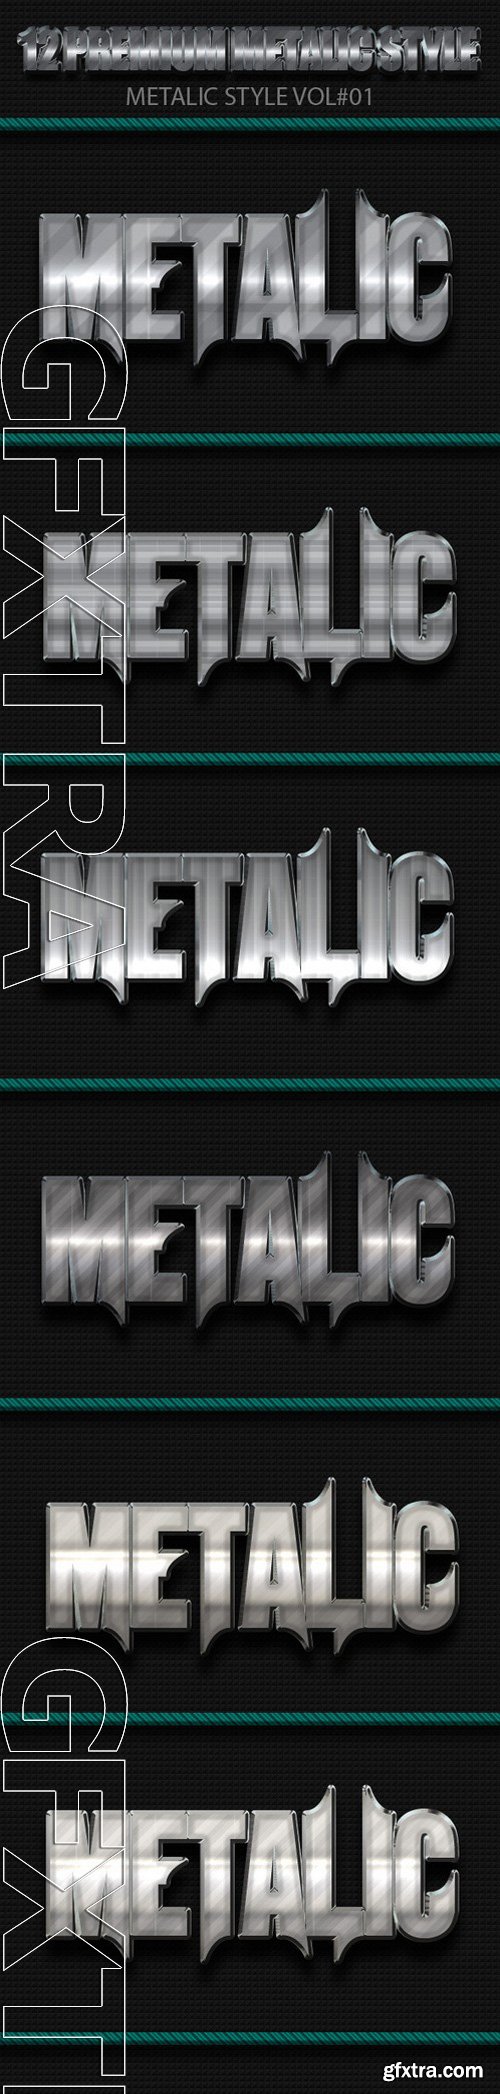 Graphicriver - 12 Premium Metalic Styles Vol 1 11469873